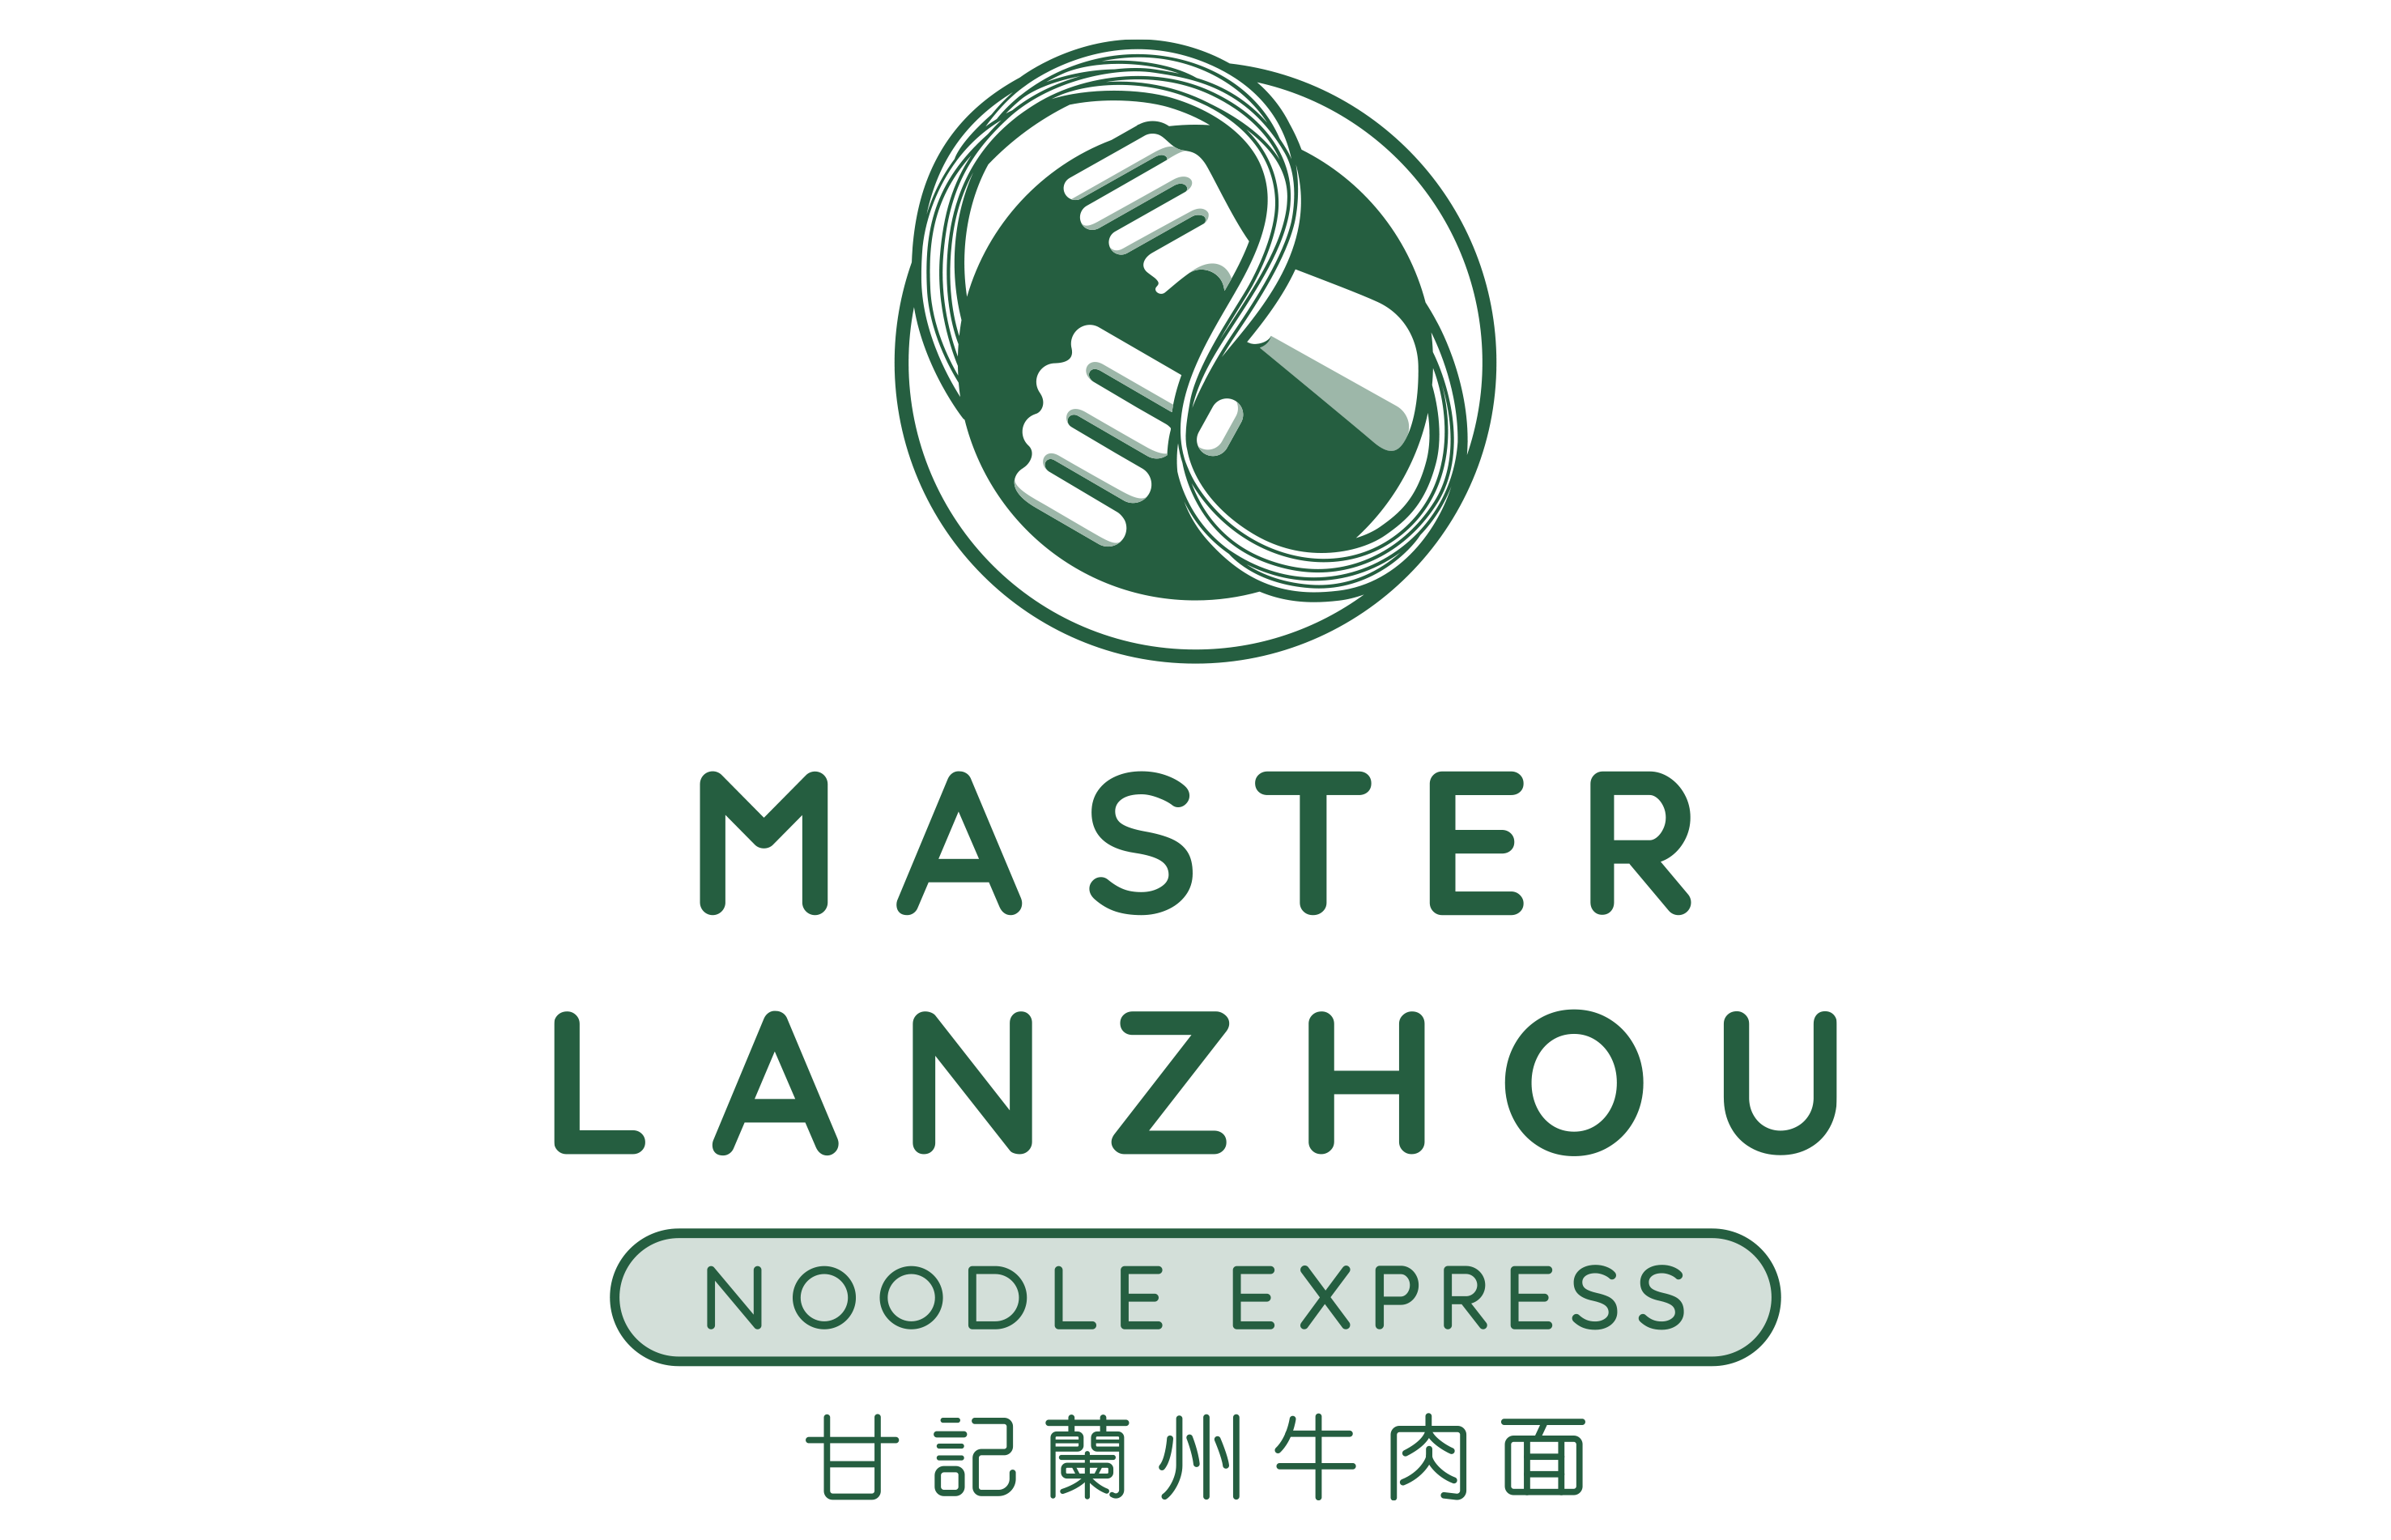 Master Lanzhou Noodle Express